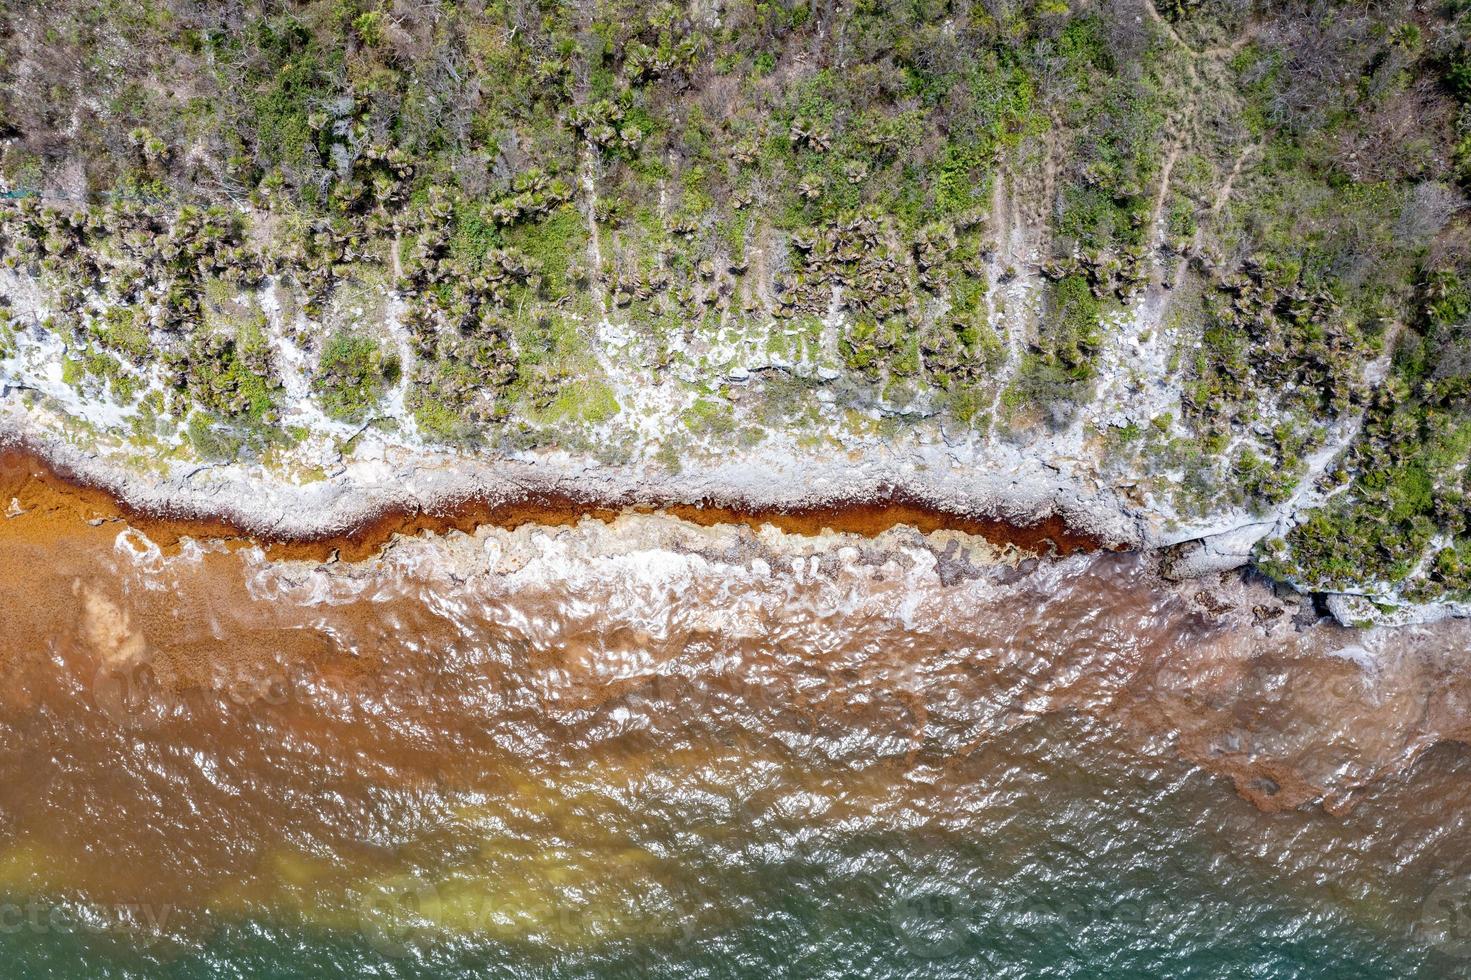 vista panorámica aérea de las playas a lo largo de la costa de tulum, méxico. foto